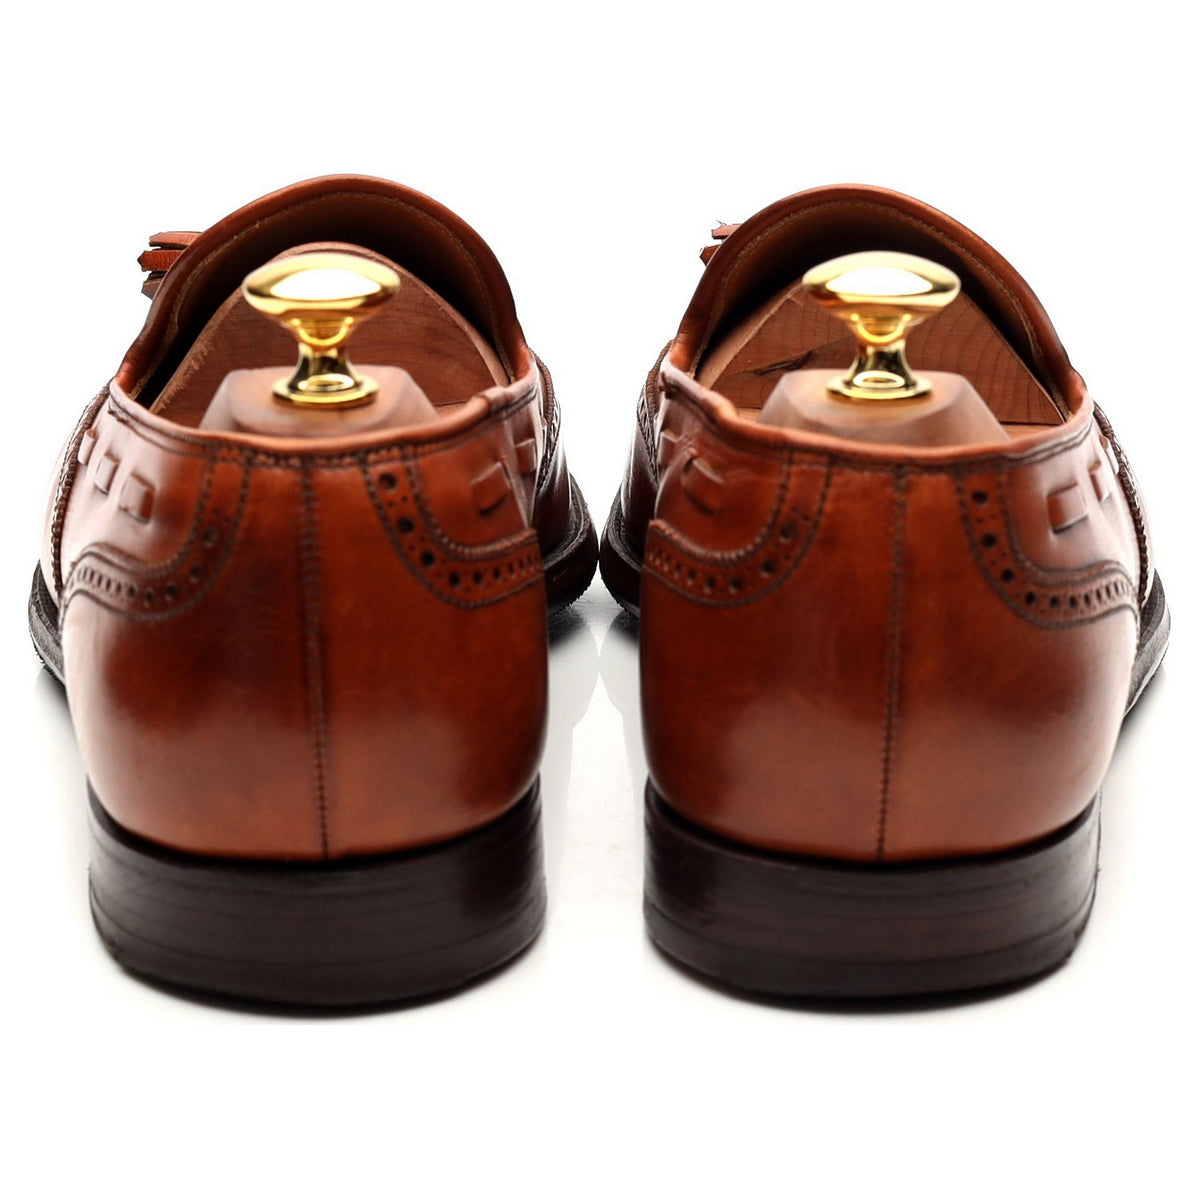 &#39;Lichfield 2&#39; Tan Brown Leather Tassel Loafers UK 9 E